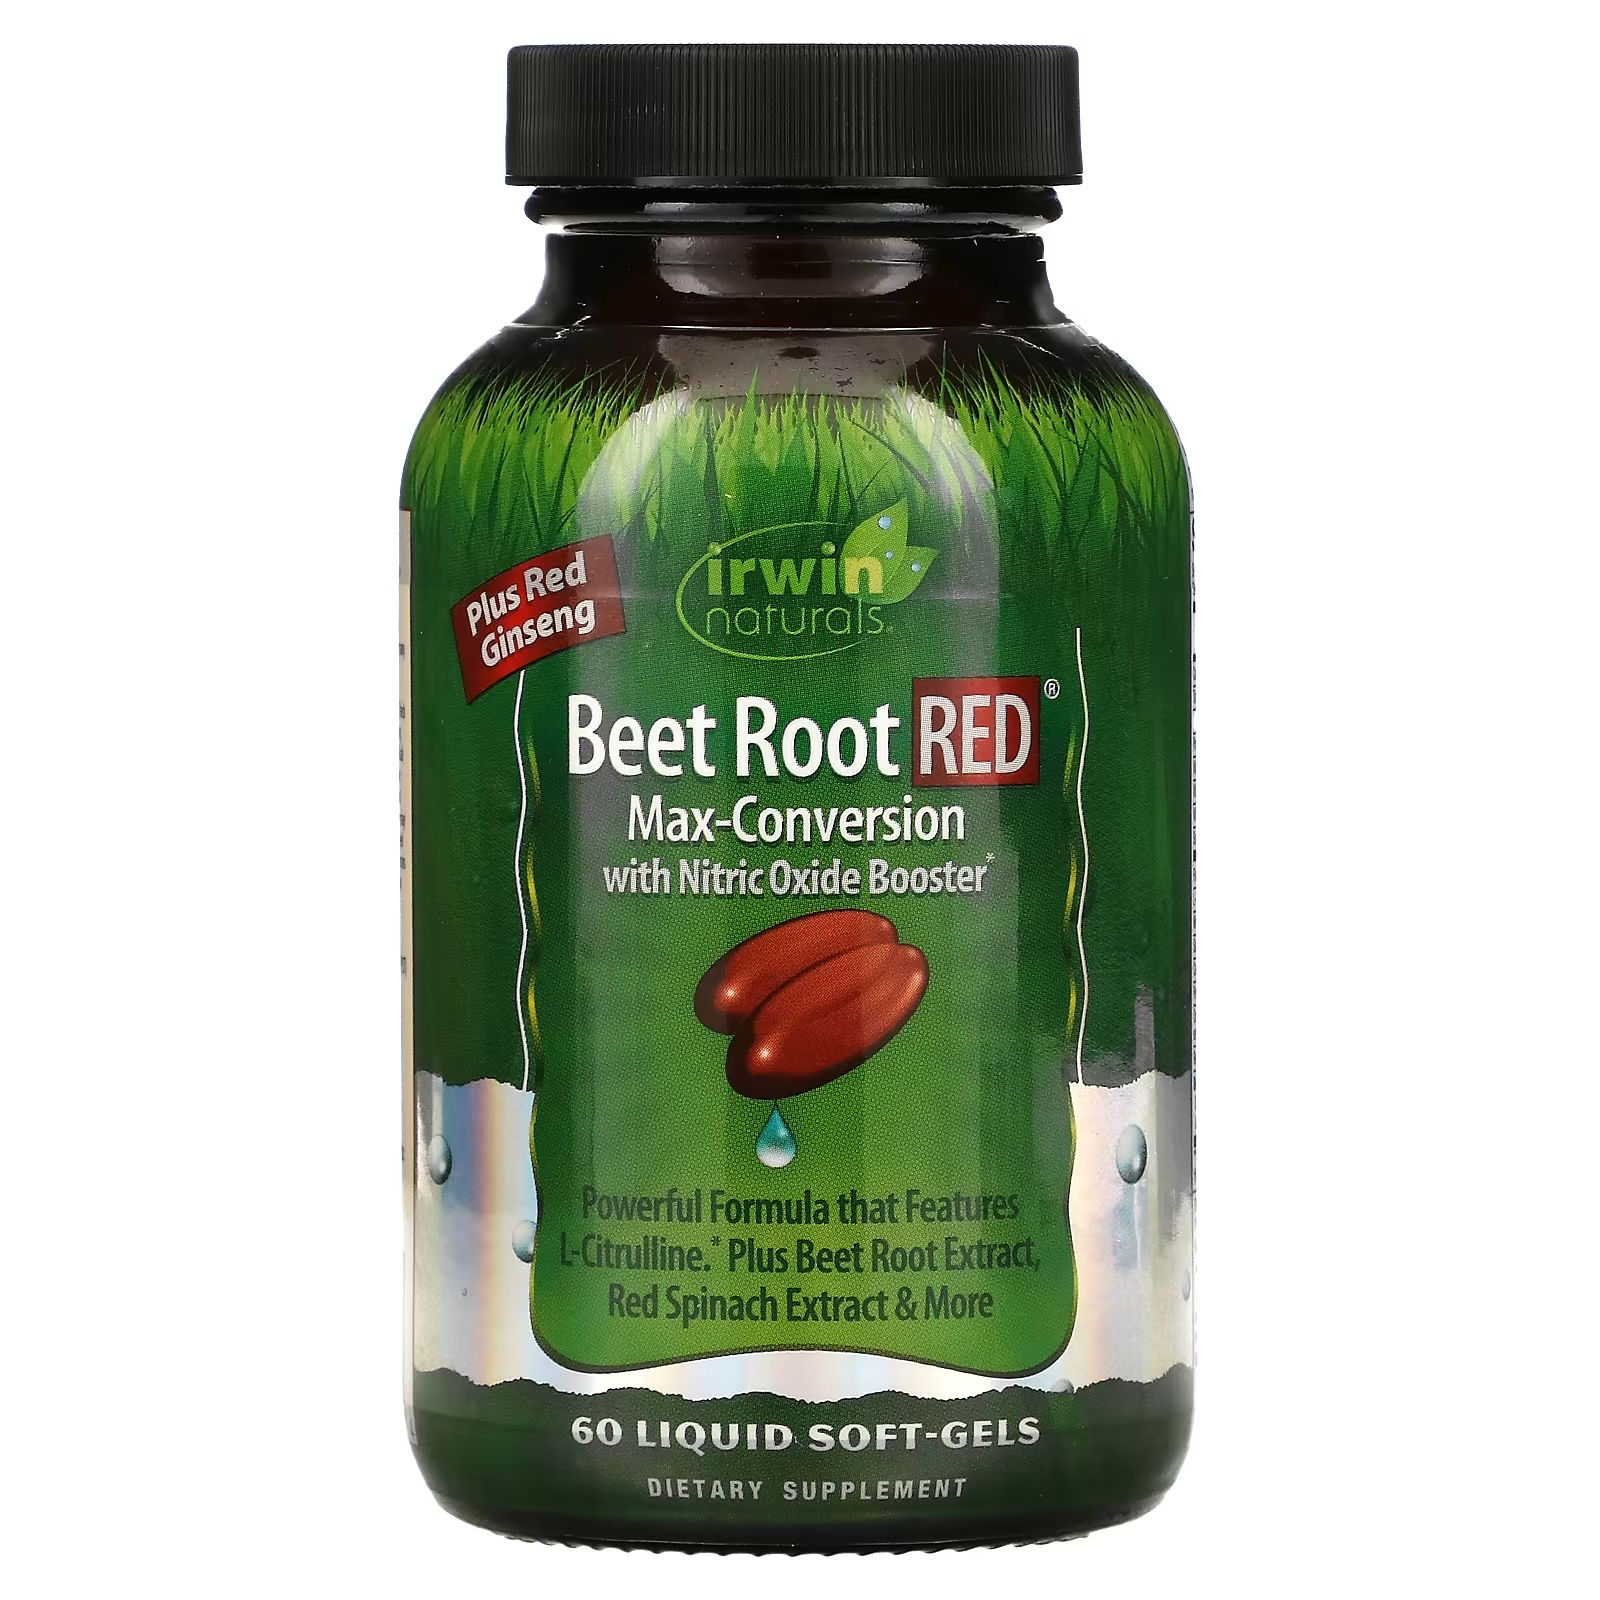 Irwin Naturals Beet Root RED Максимальная конверсия с ускорителем окиси азота, 60 мягких капсул irwin naturals beet root red максимальная конверсия с ускорителем окиси азота 60 мягких капсул с жидким наполнителем